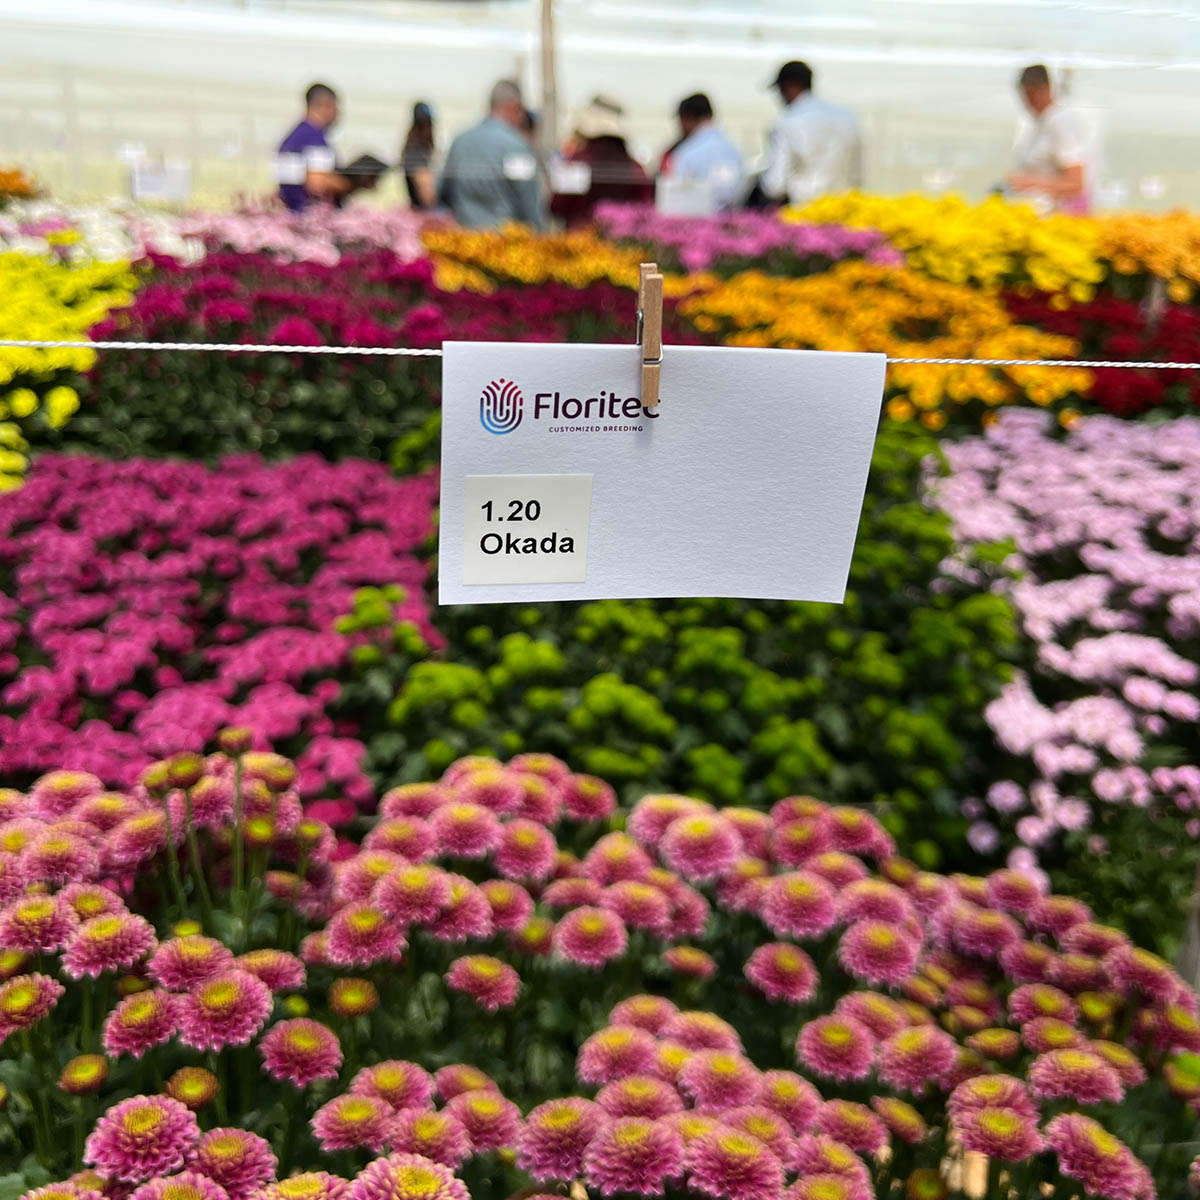 Floritec Colombia Chrysanthemum Trials 2022 feature on Thursd